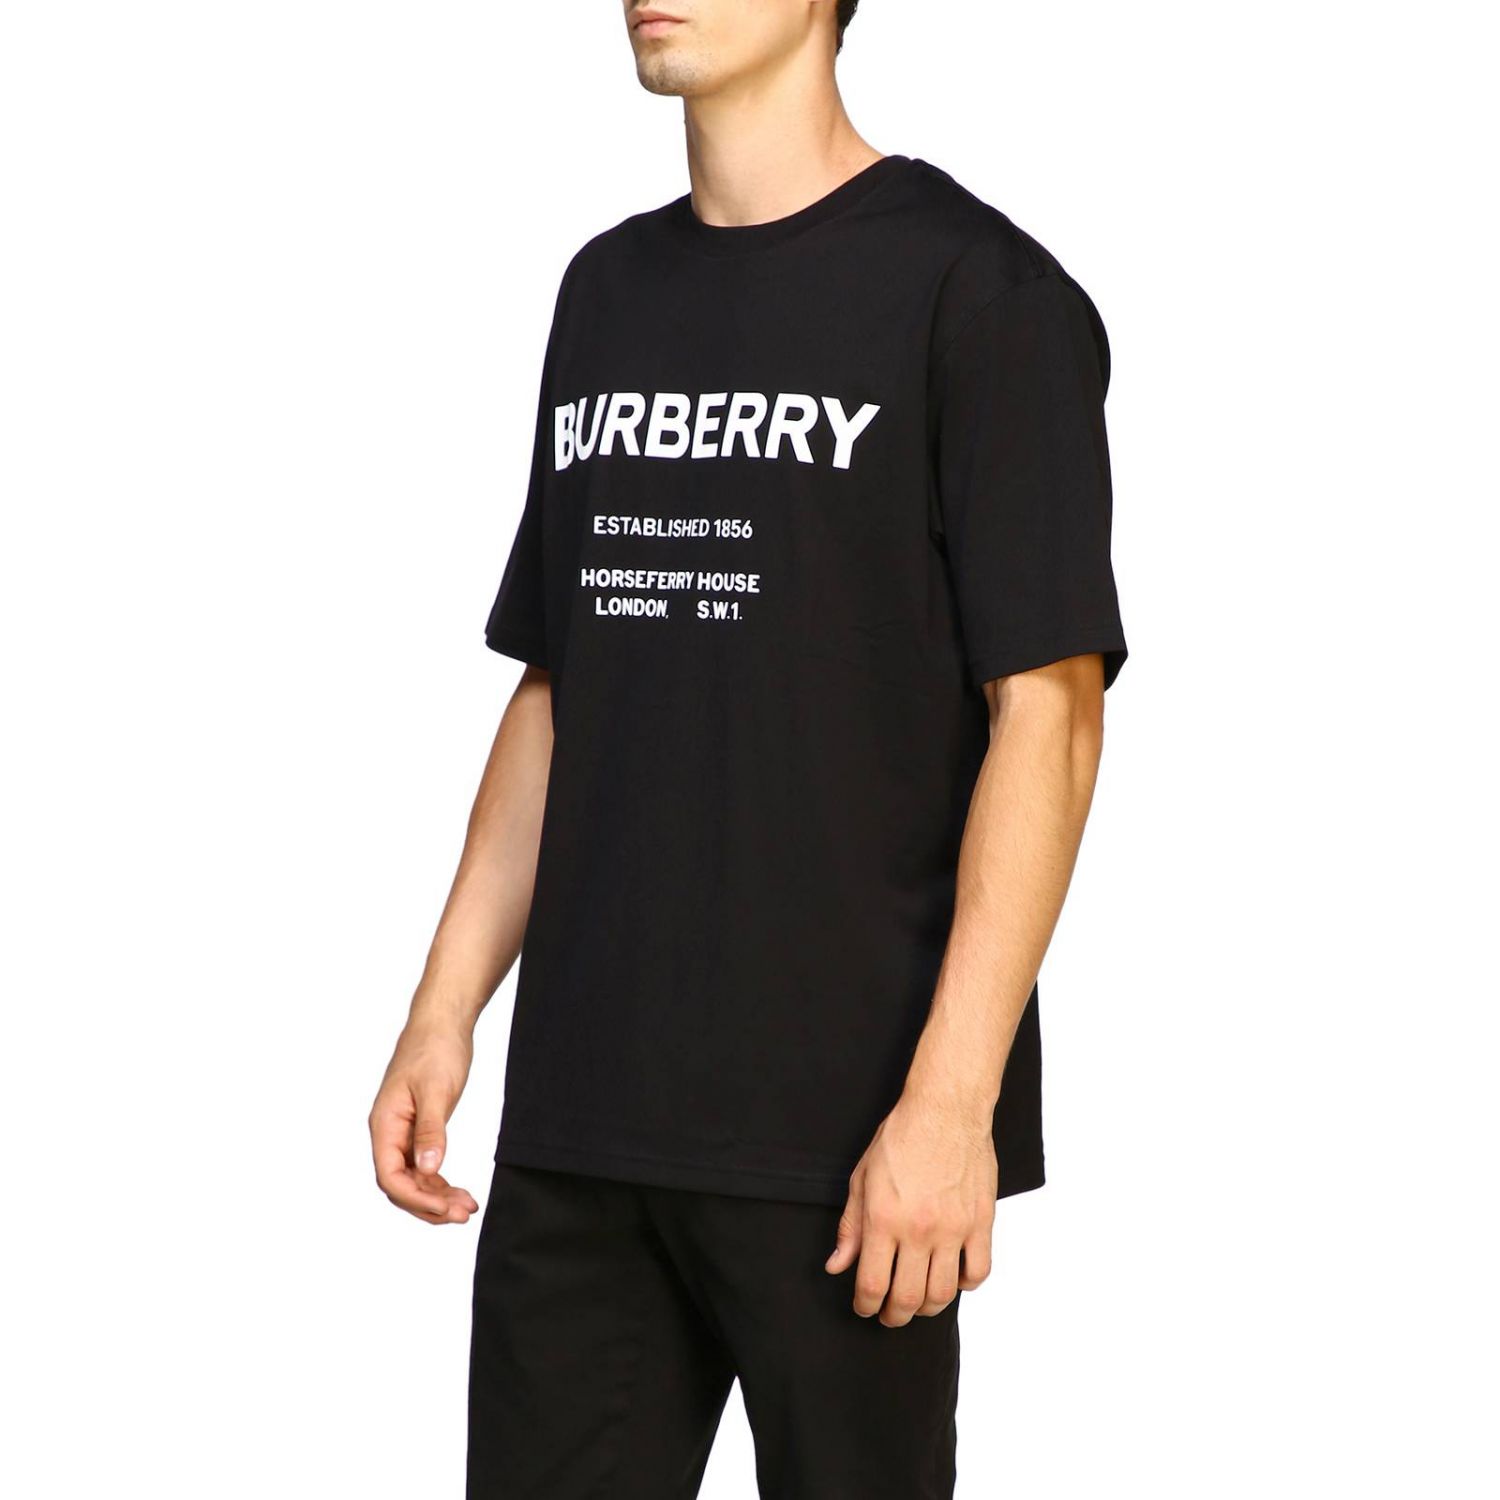 T-shirt men Burberry | T-Shirt Burberry Men Black | T-Shirt Burberry